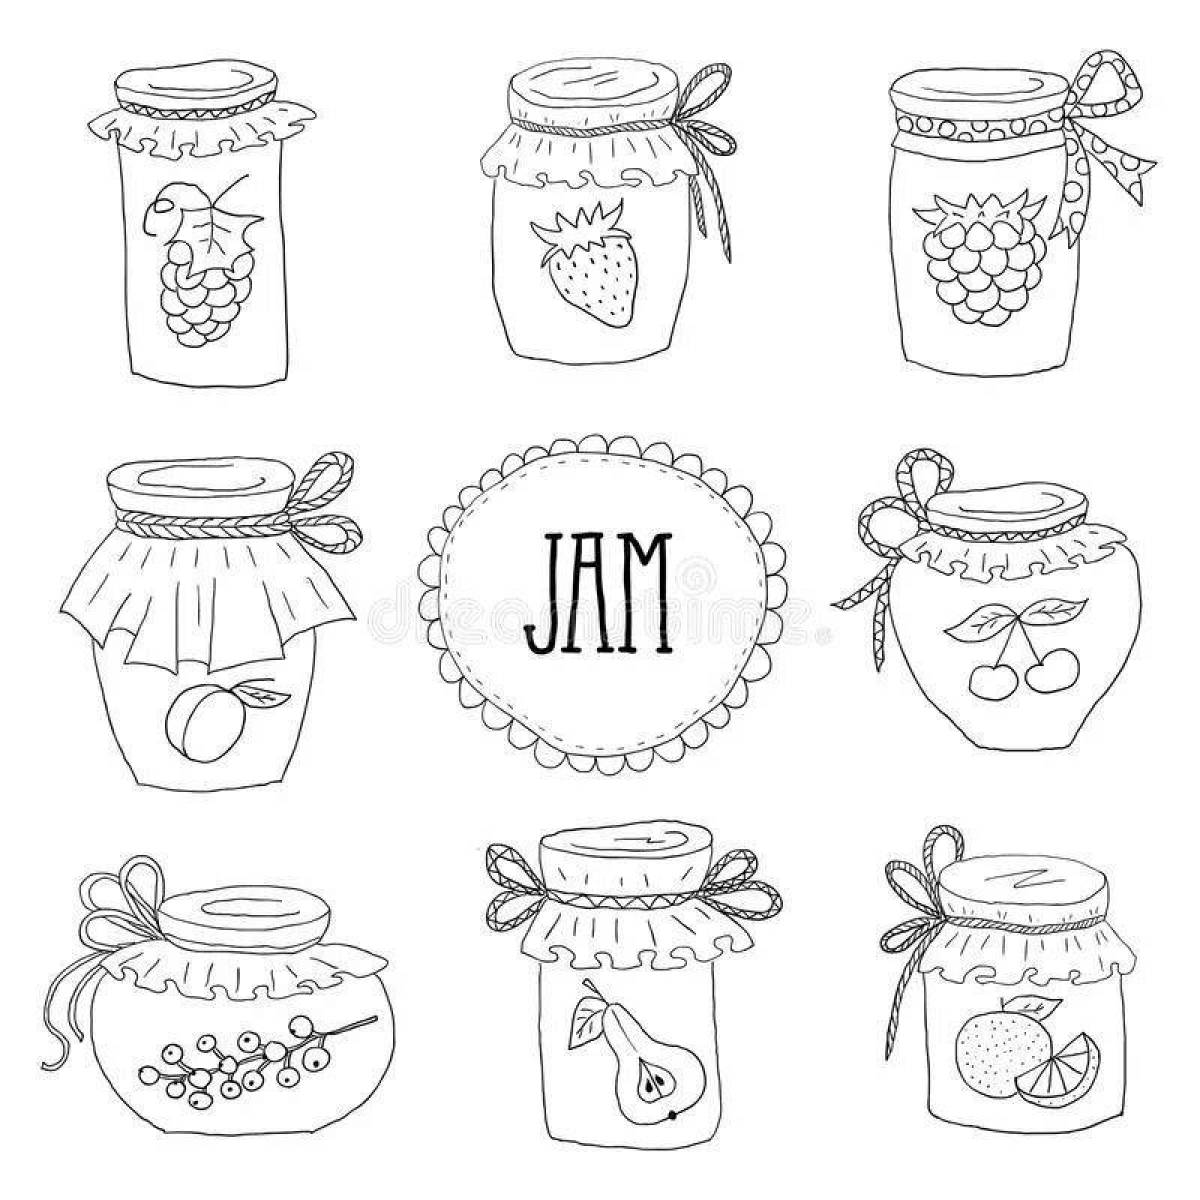 Coloring book shining jar of jam